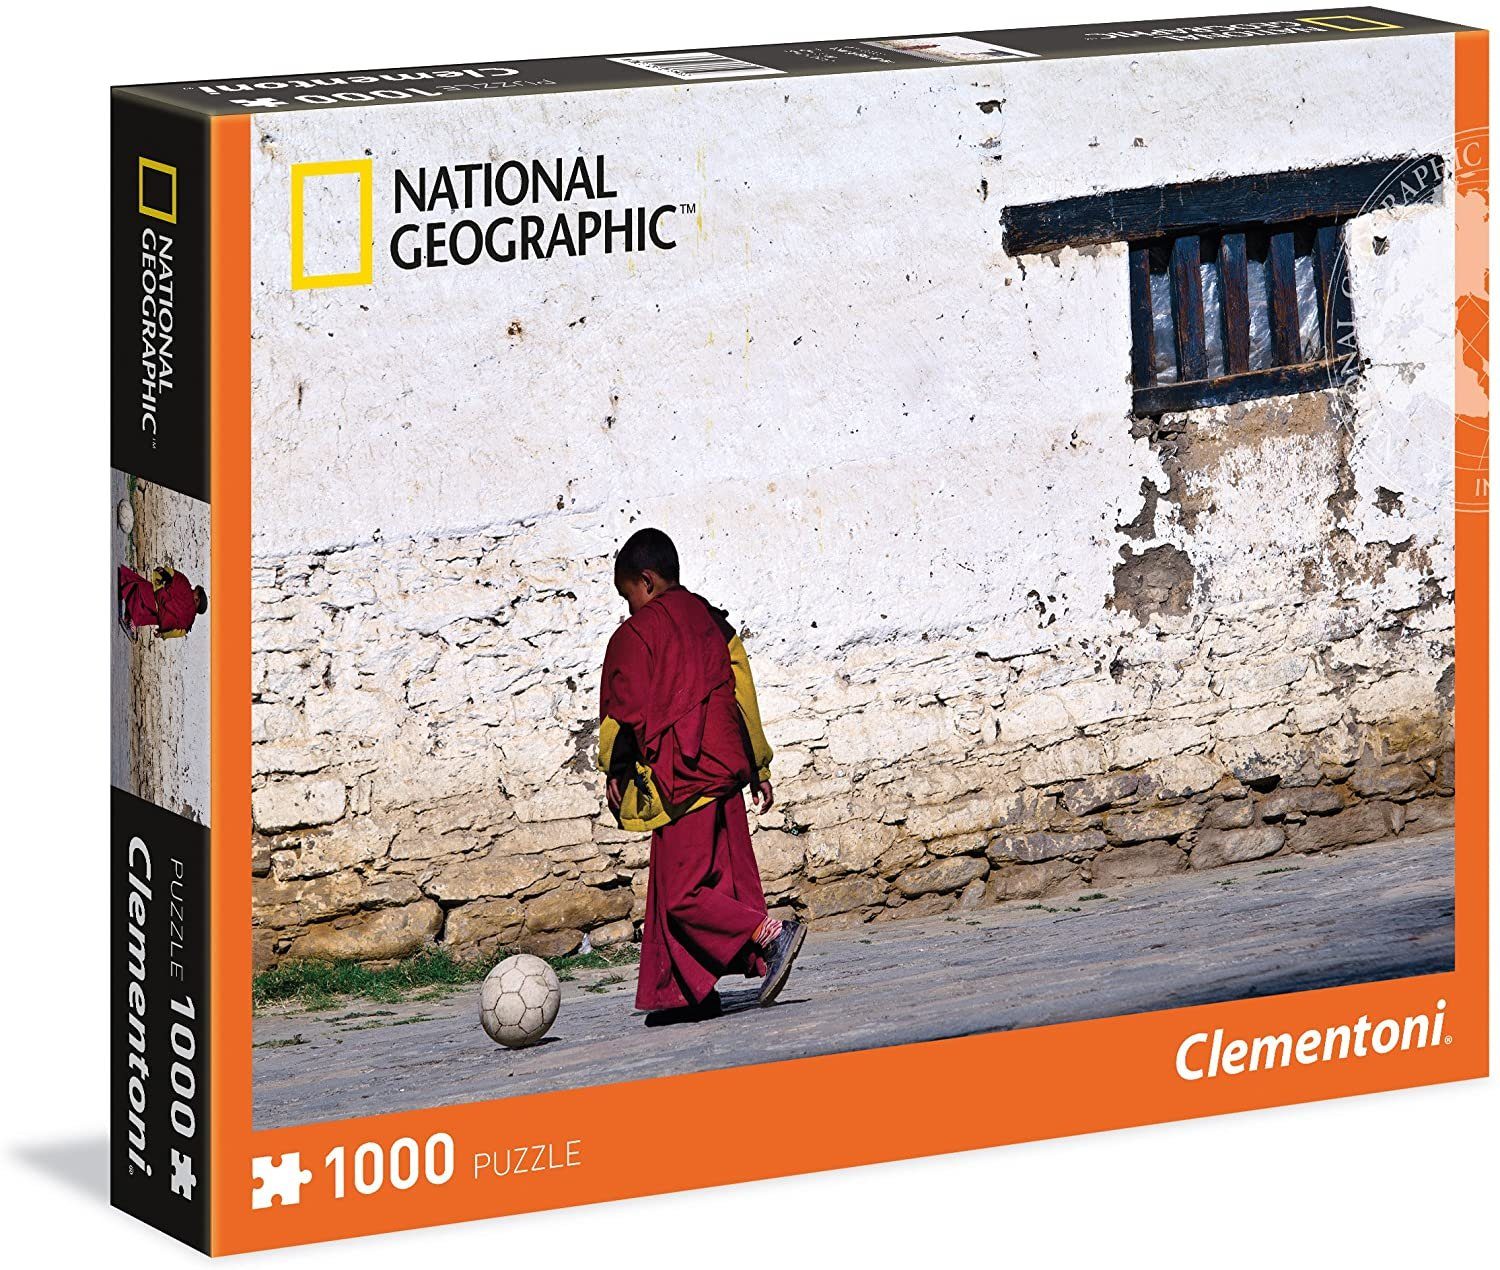 Clementoni® Puzzle Clementoni Puzzle National Geographic "Young Buddhist Monk" 1000 Teile, 1000 Puzzleteile